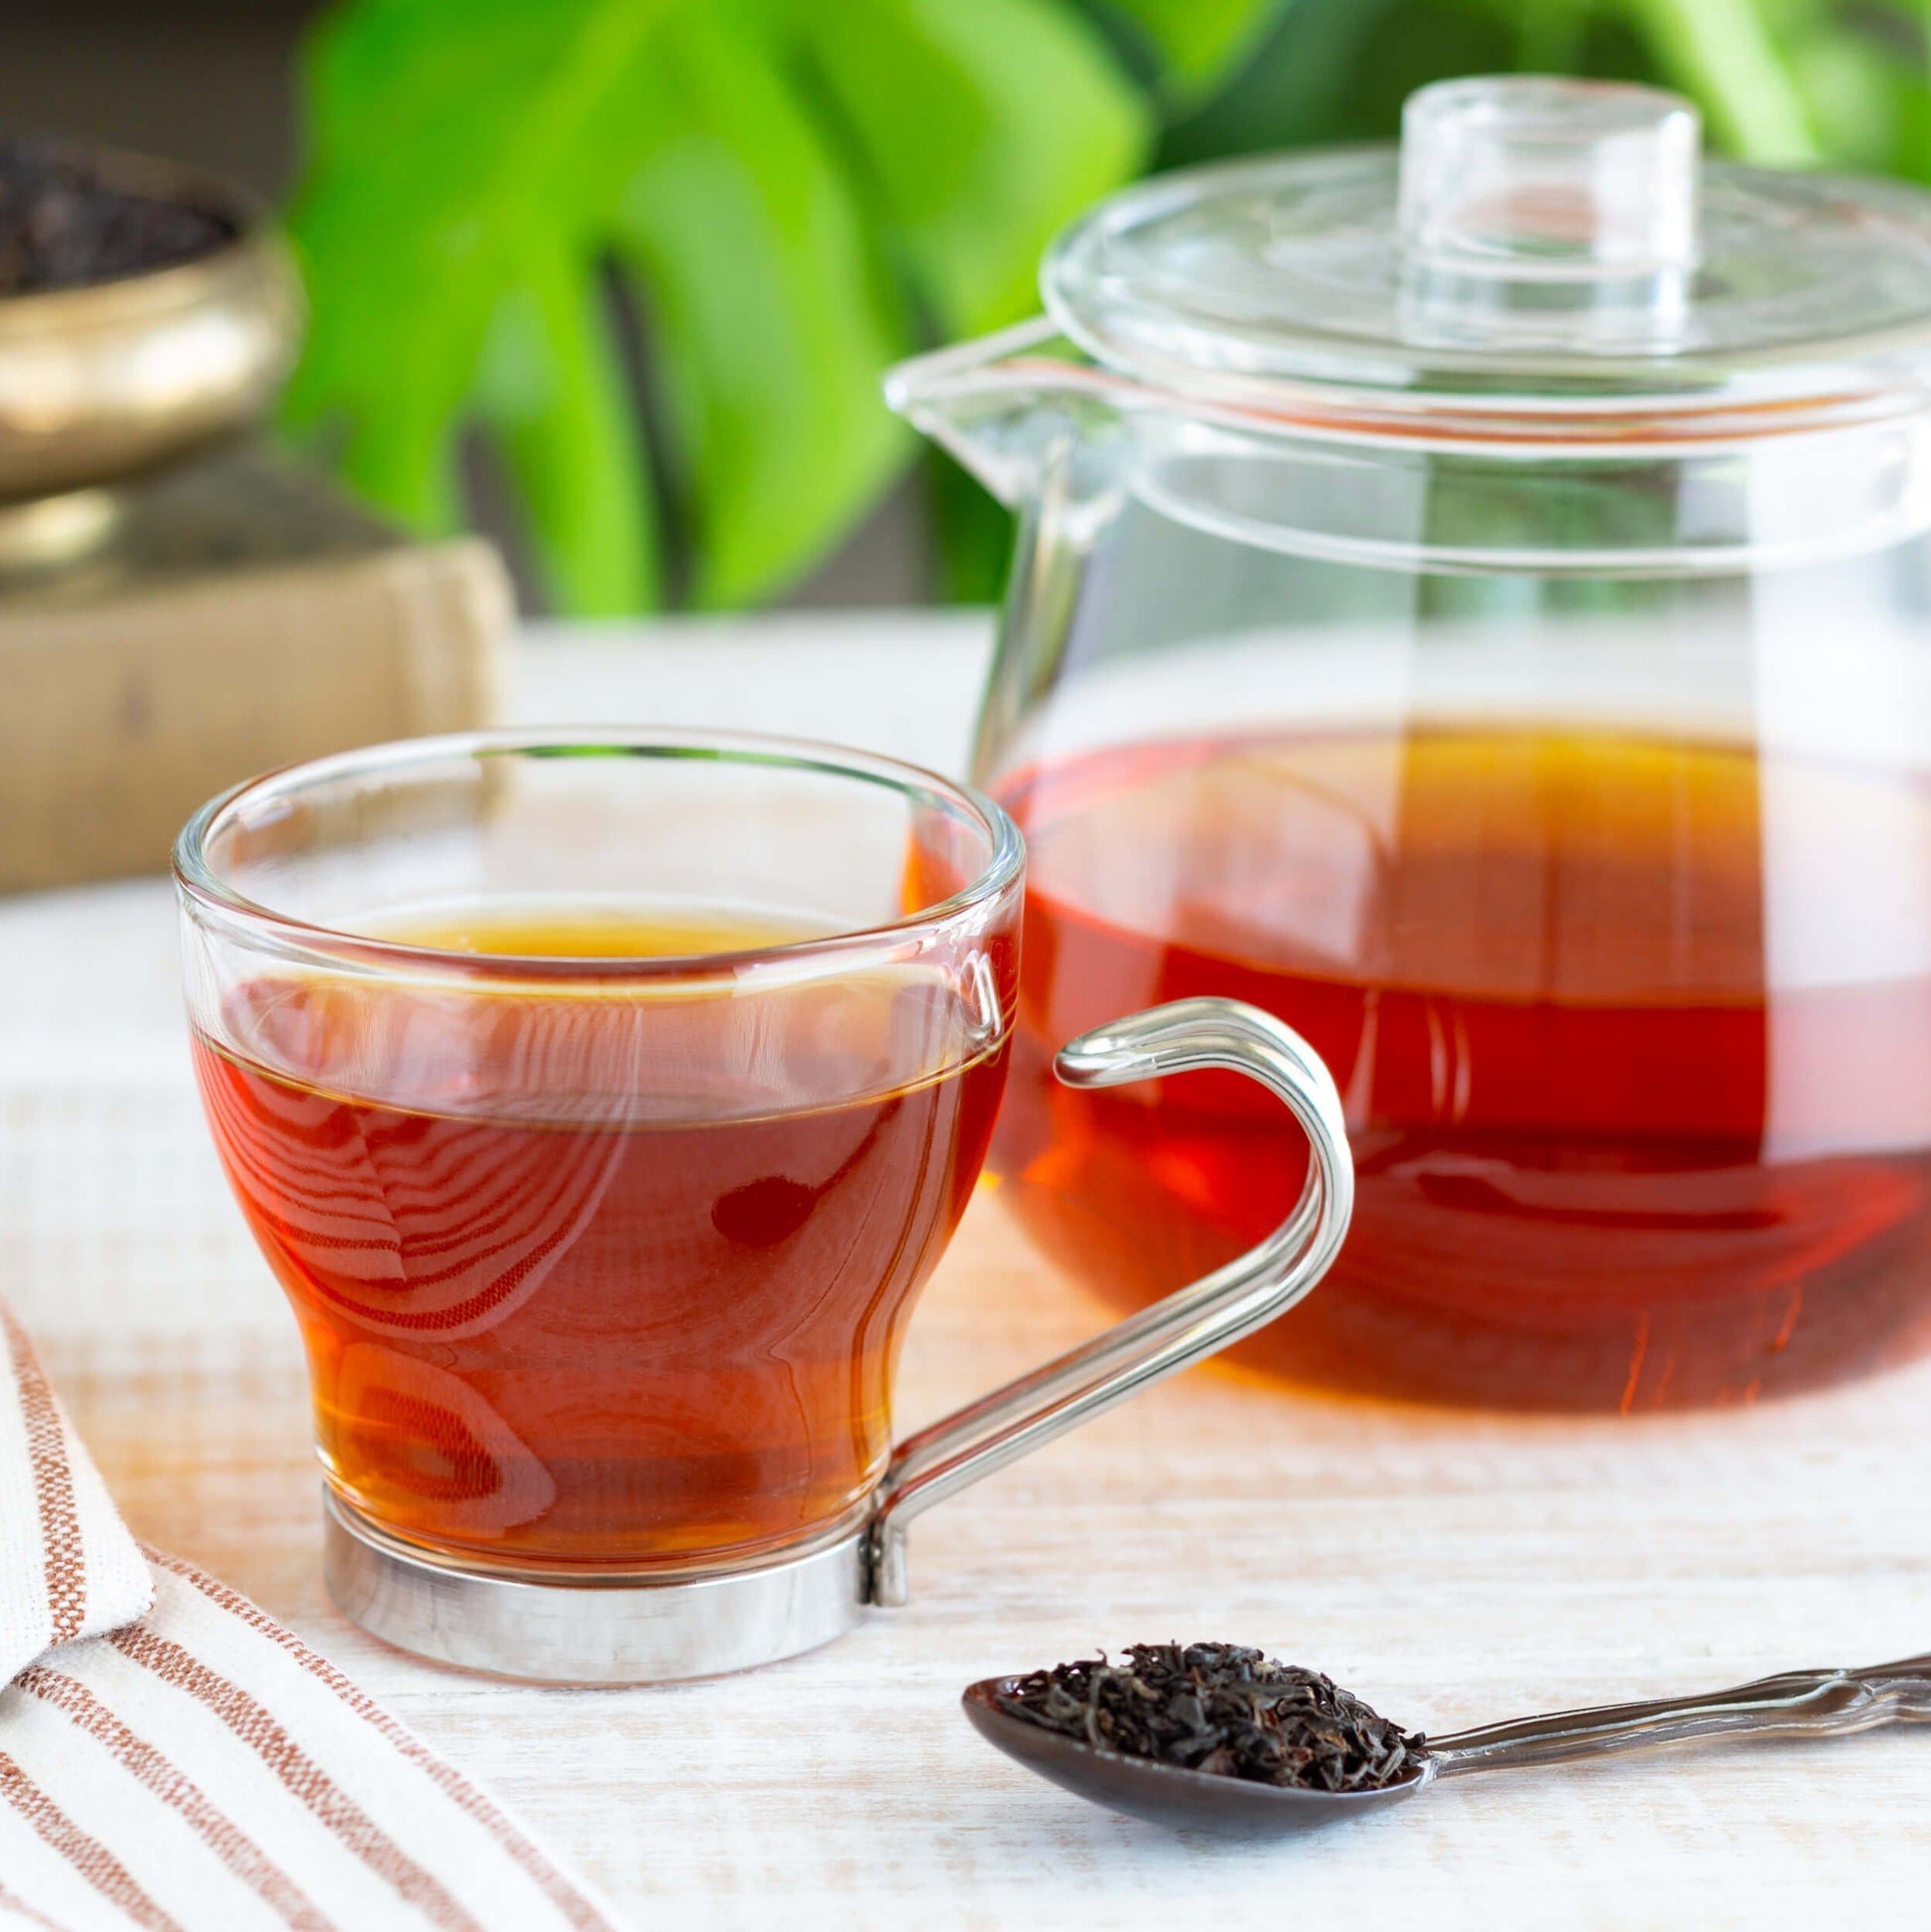 Assam Organic Black Tea shown brewed in a glass mug and glass teapot